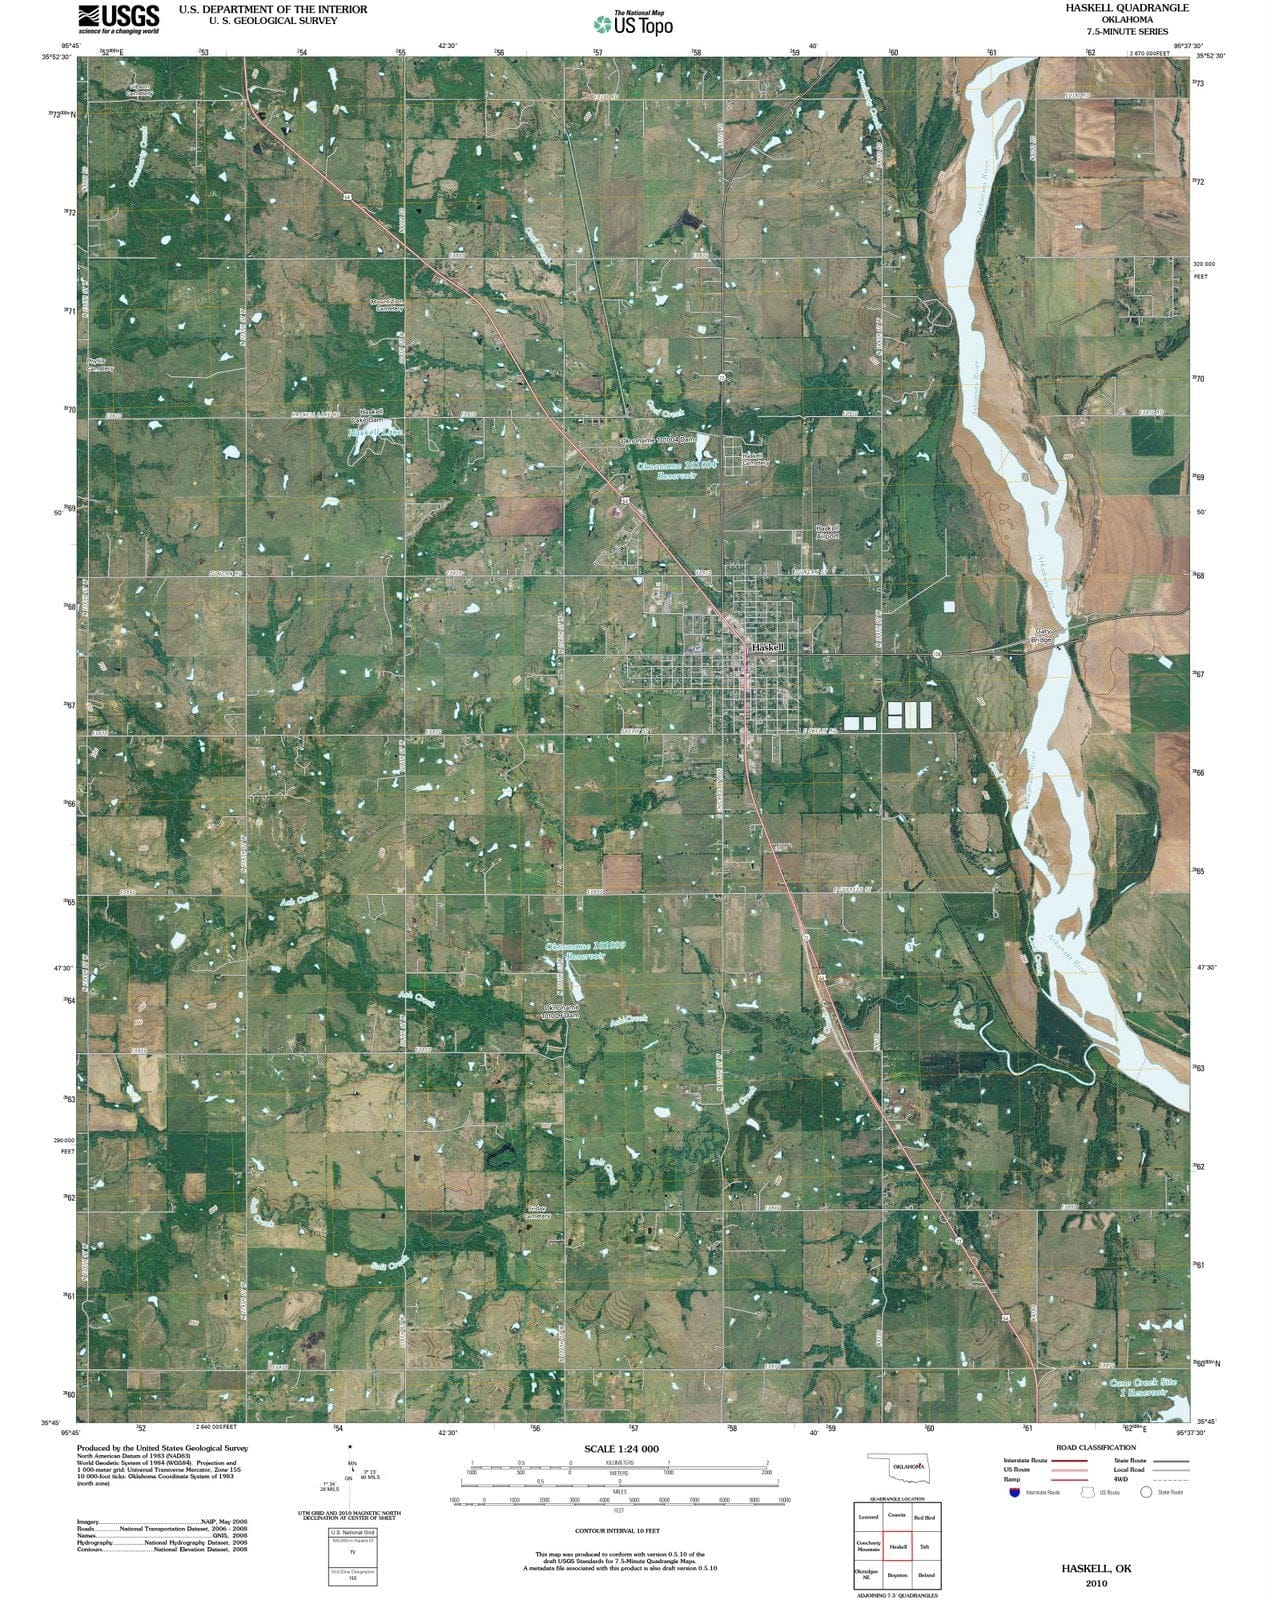 2010 Haskell, OK - Oklahoma - USGS Topographic Map